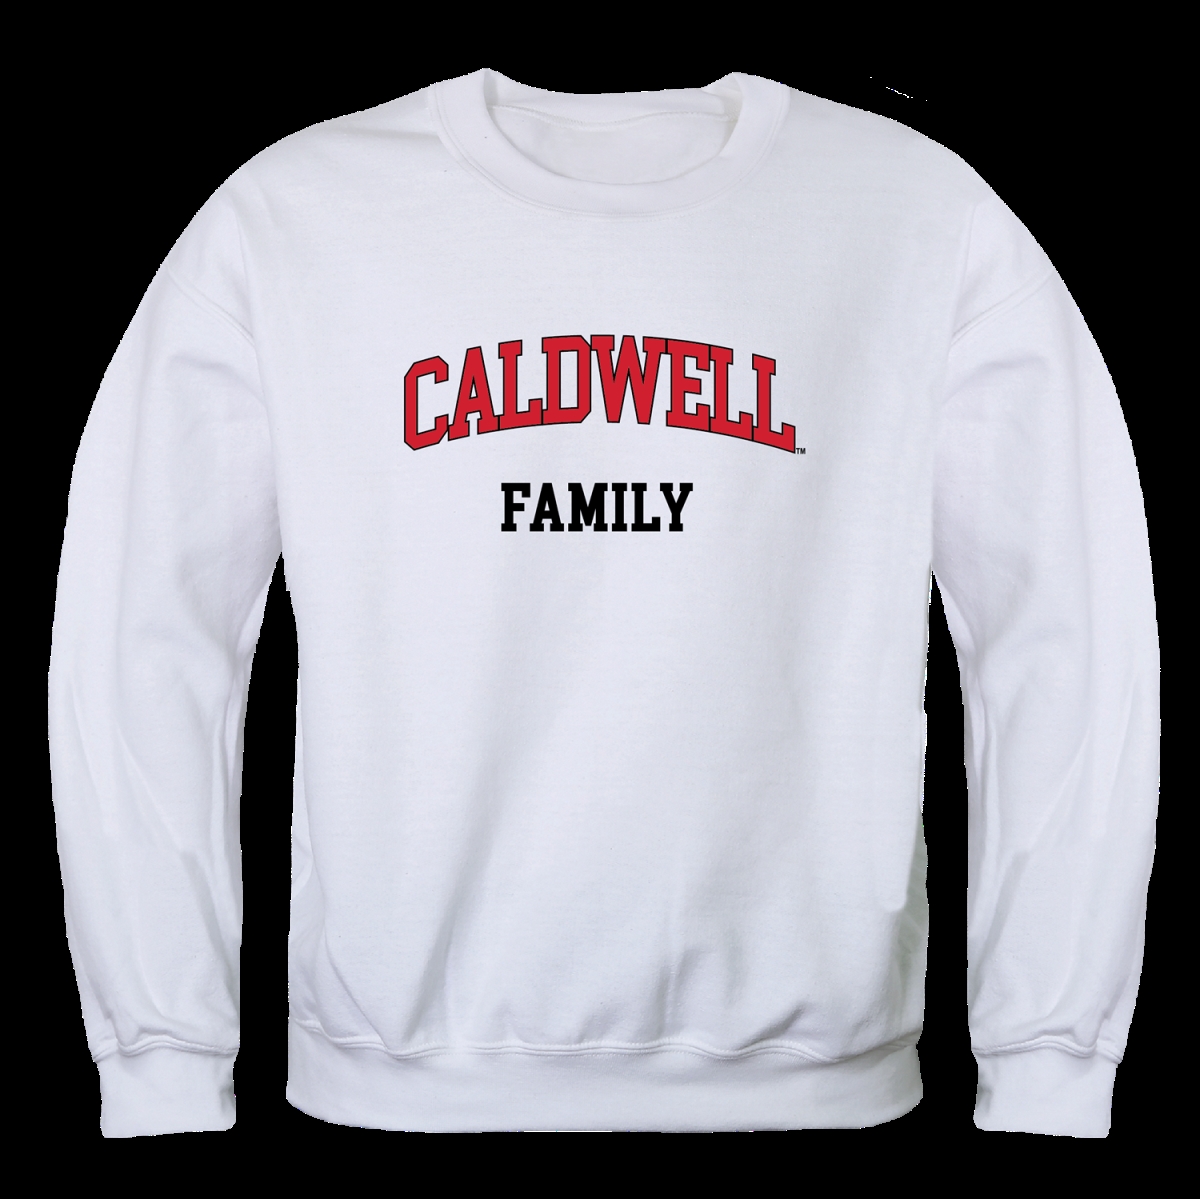 W Republic 572-505-WHT-02 Caldwell University Cougars Family Crewneck Sweatshirt&#44; White - Medium